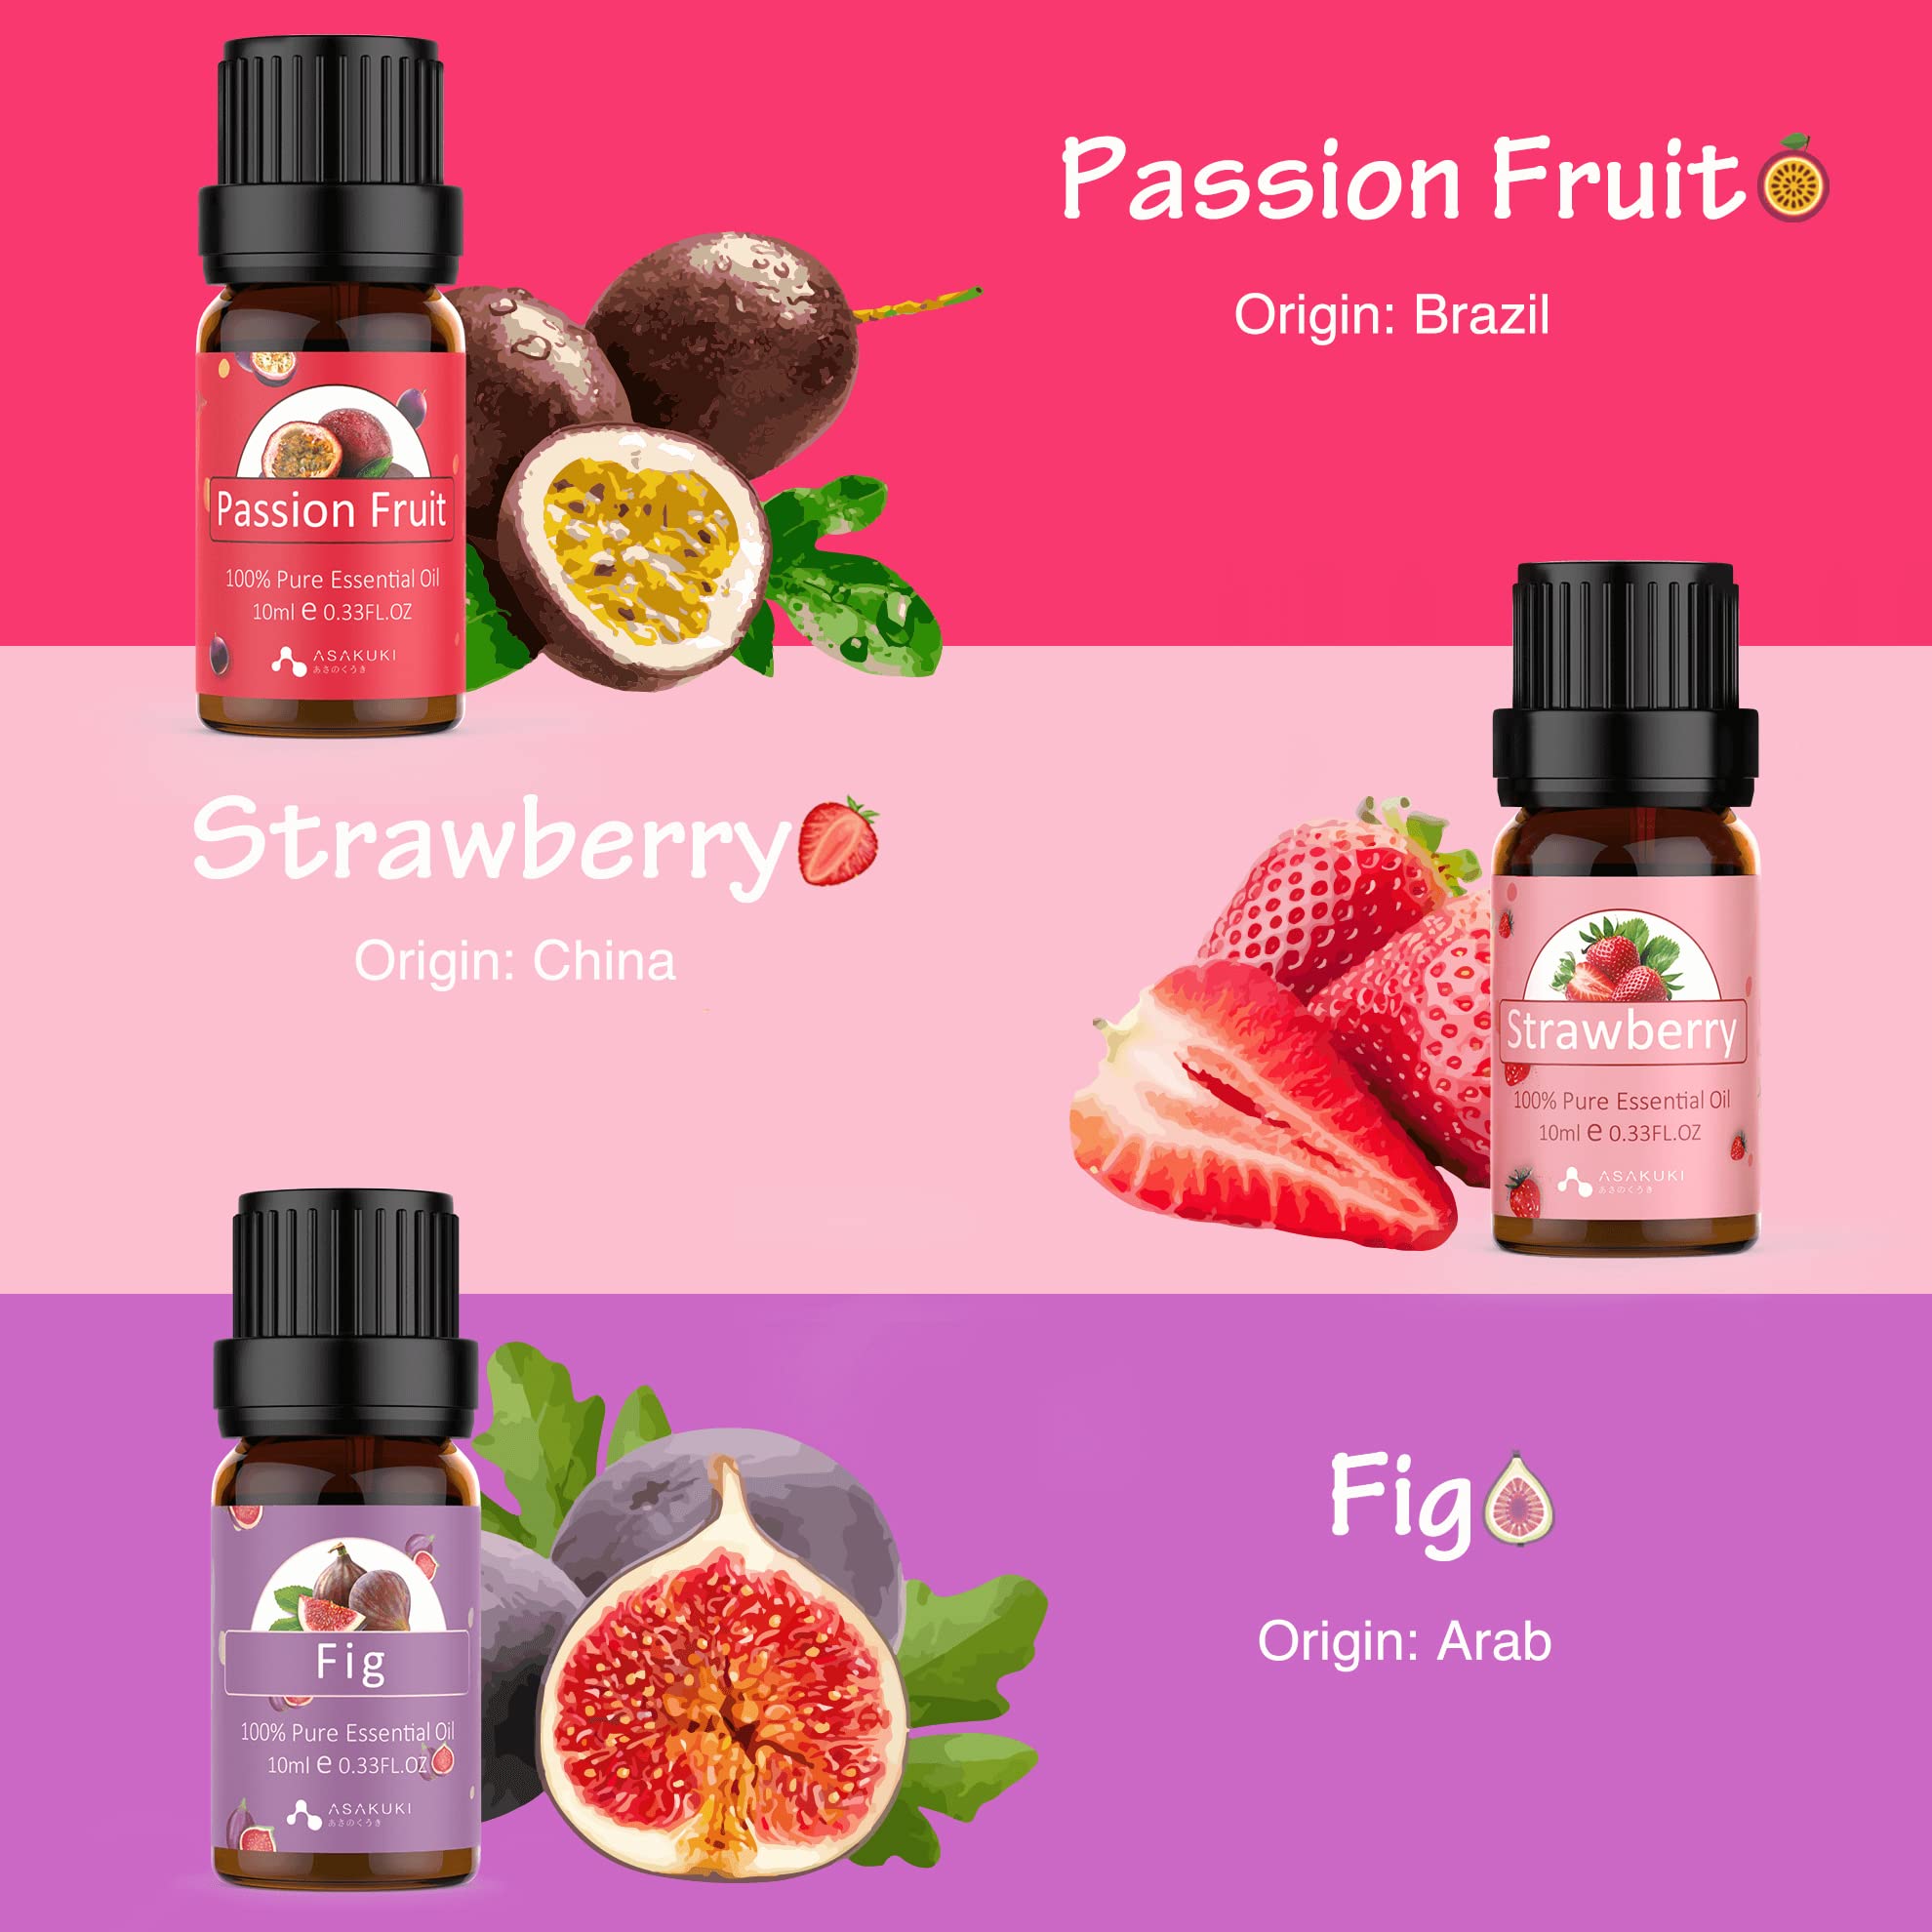 100% pure organic strawberry essential oil